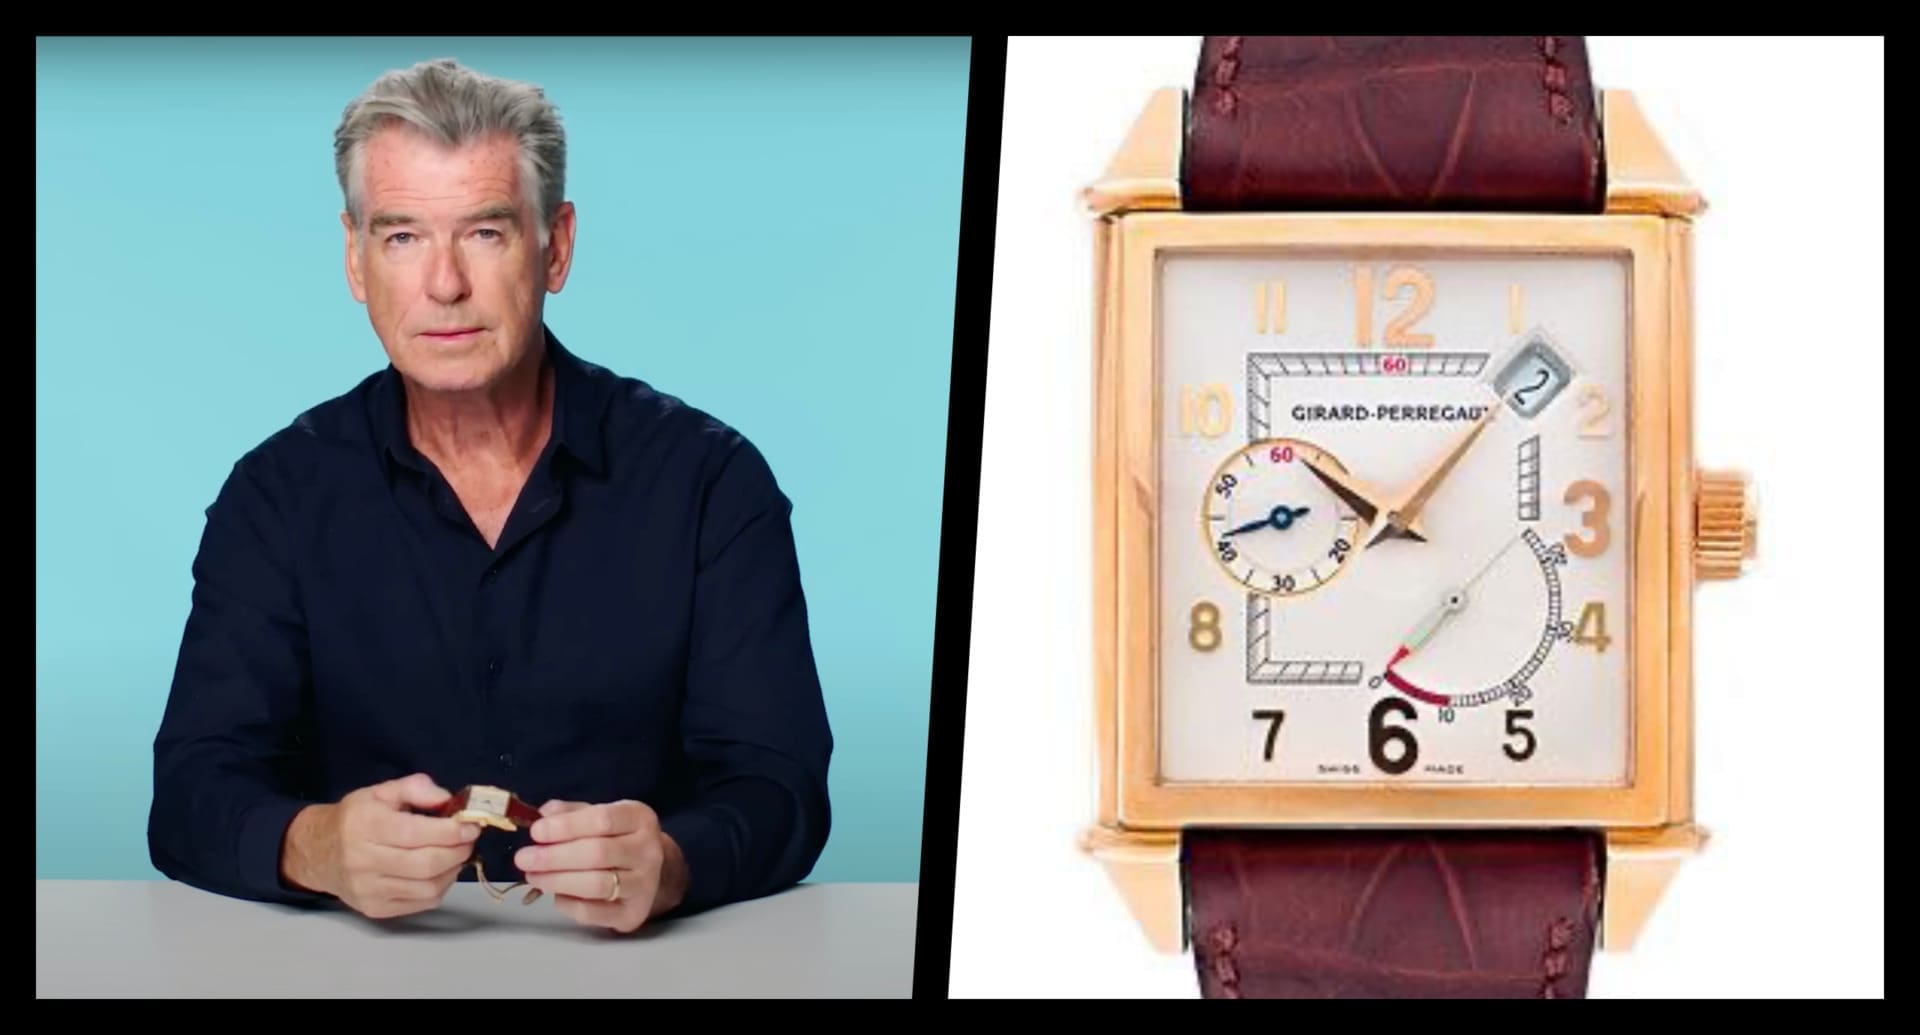 Pierce Brosnan recalls his “knee-shaking” watch purchase in British GQ video